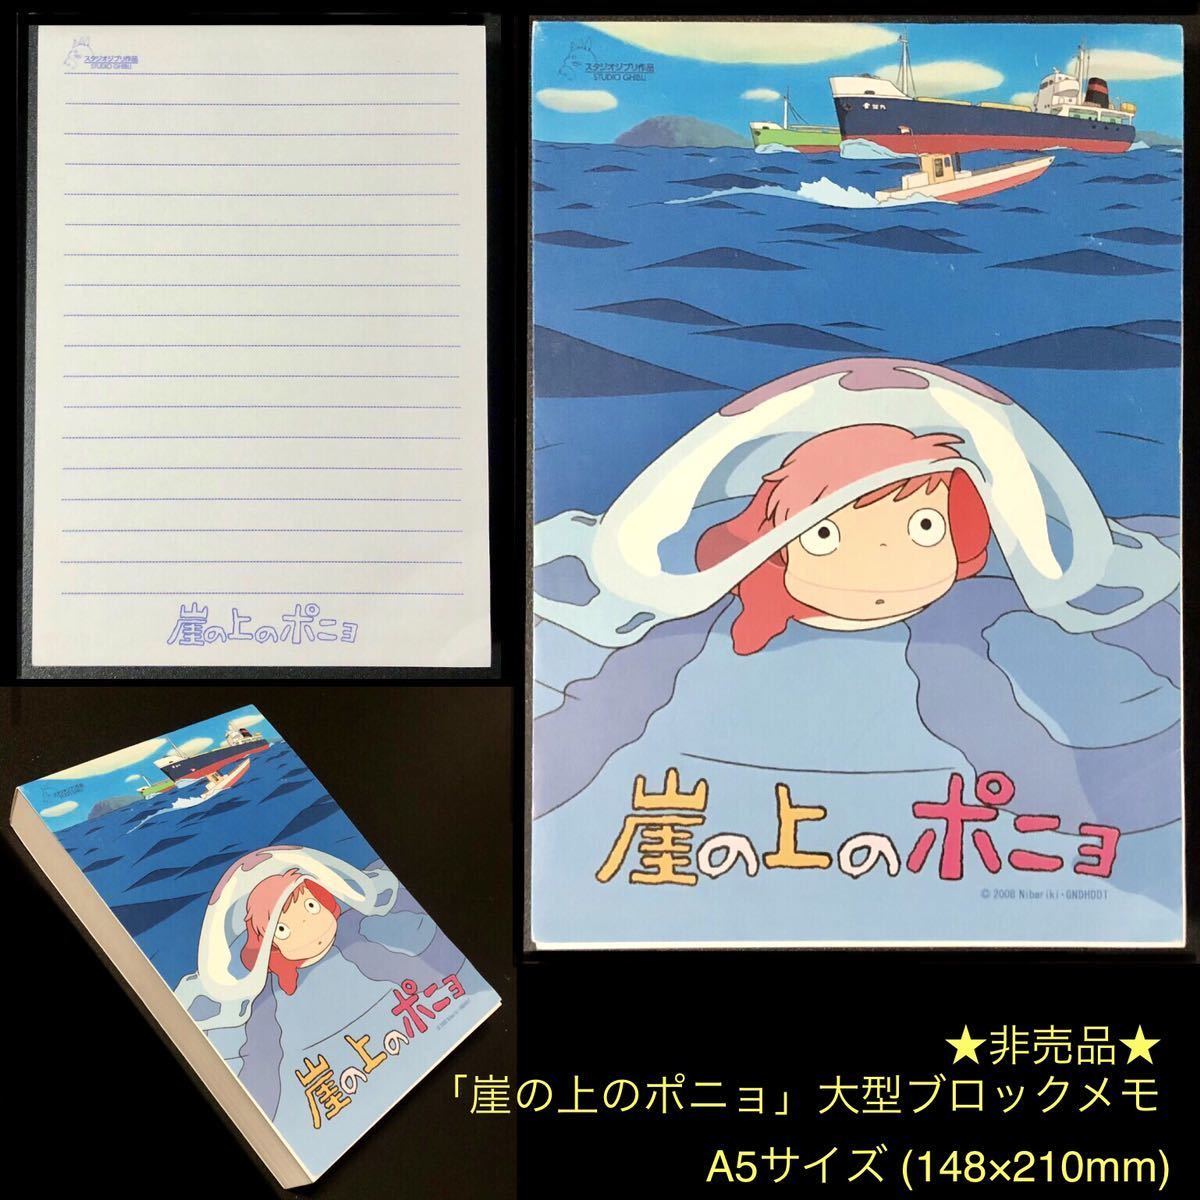  not for sale valuable *[.. on. ponyo] large block memory * unused goods Studio Ghibli memo pad memory paper memory pad stationery stationery miscellaneous goods goods Miyazaki .